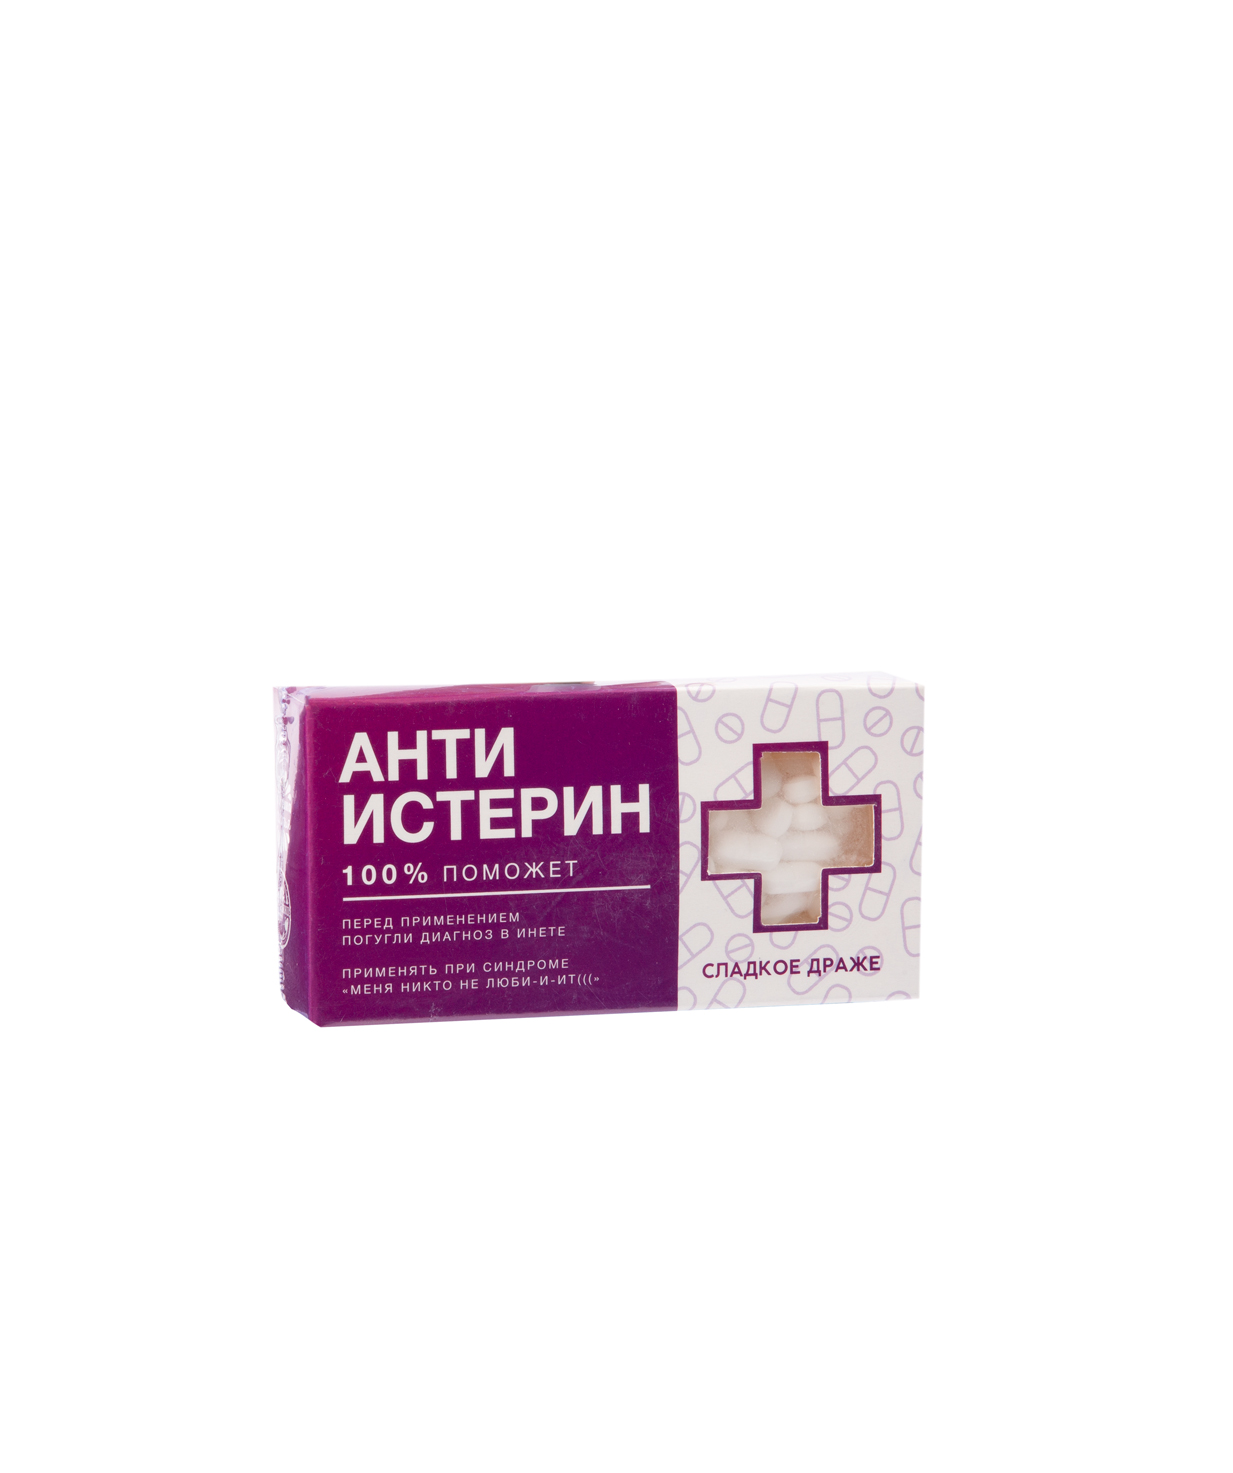 Конфеты - таблетки `Jpit.am` Анти-истерин